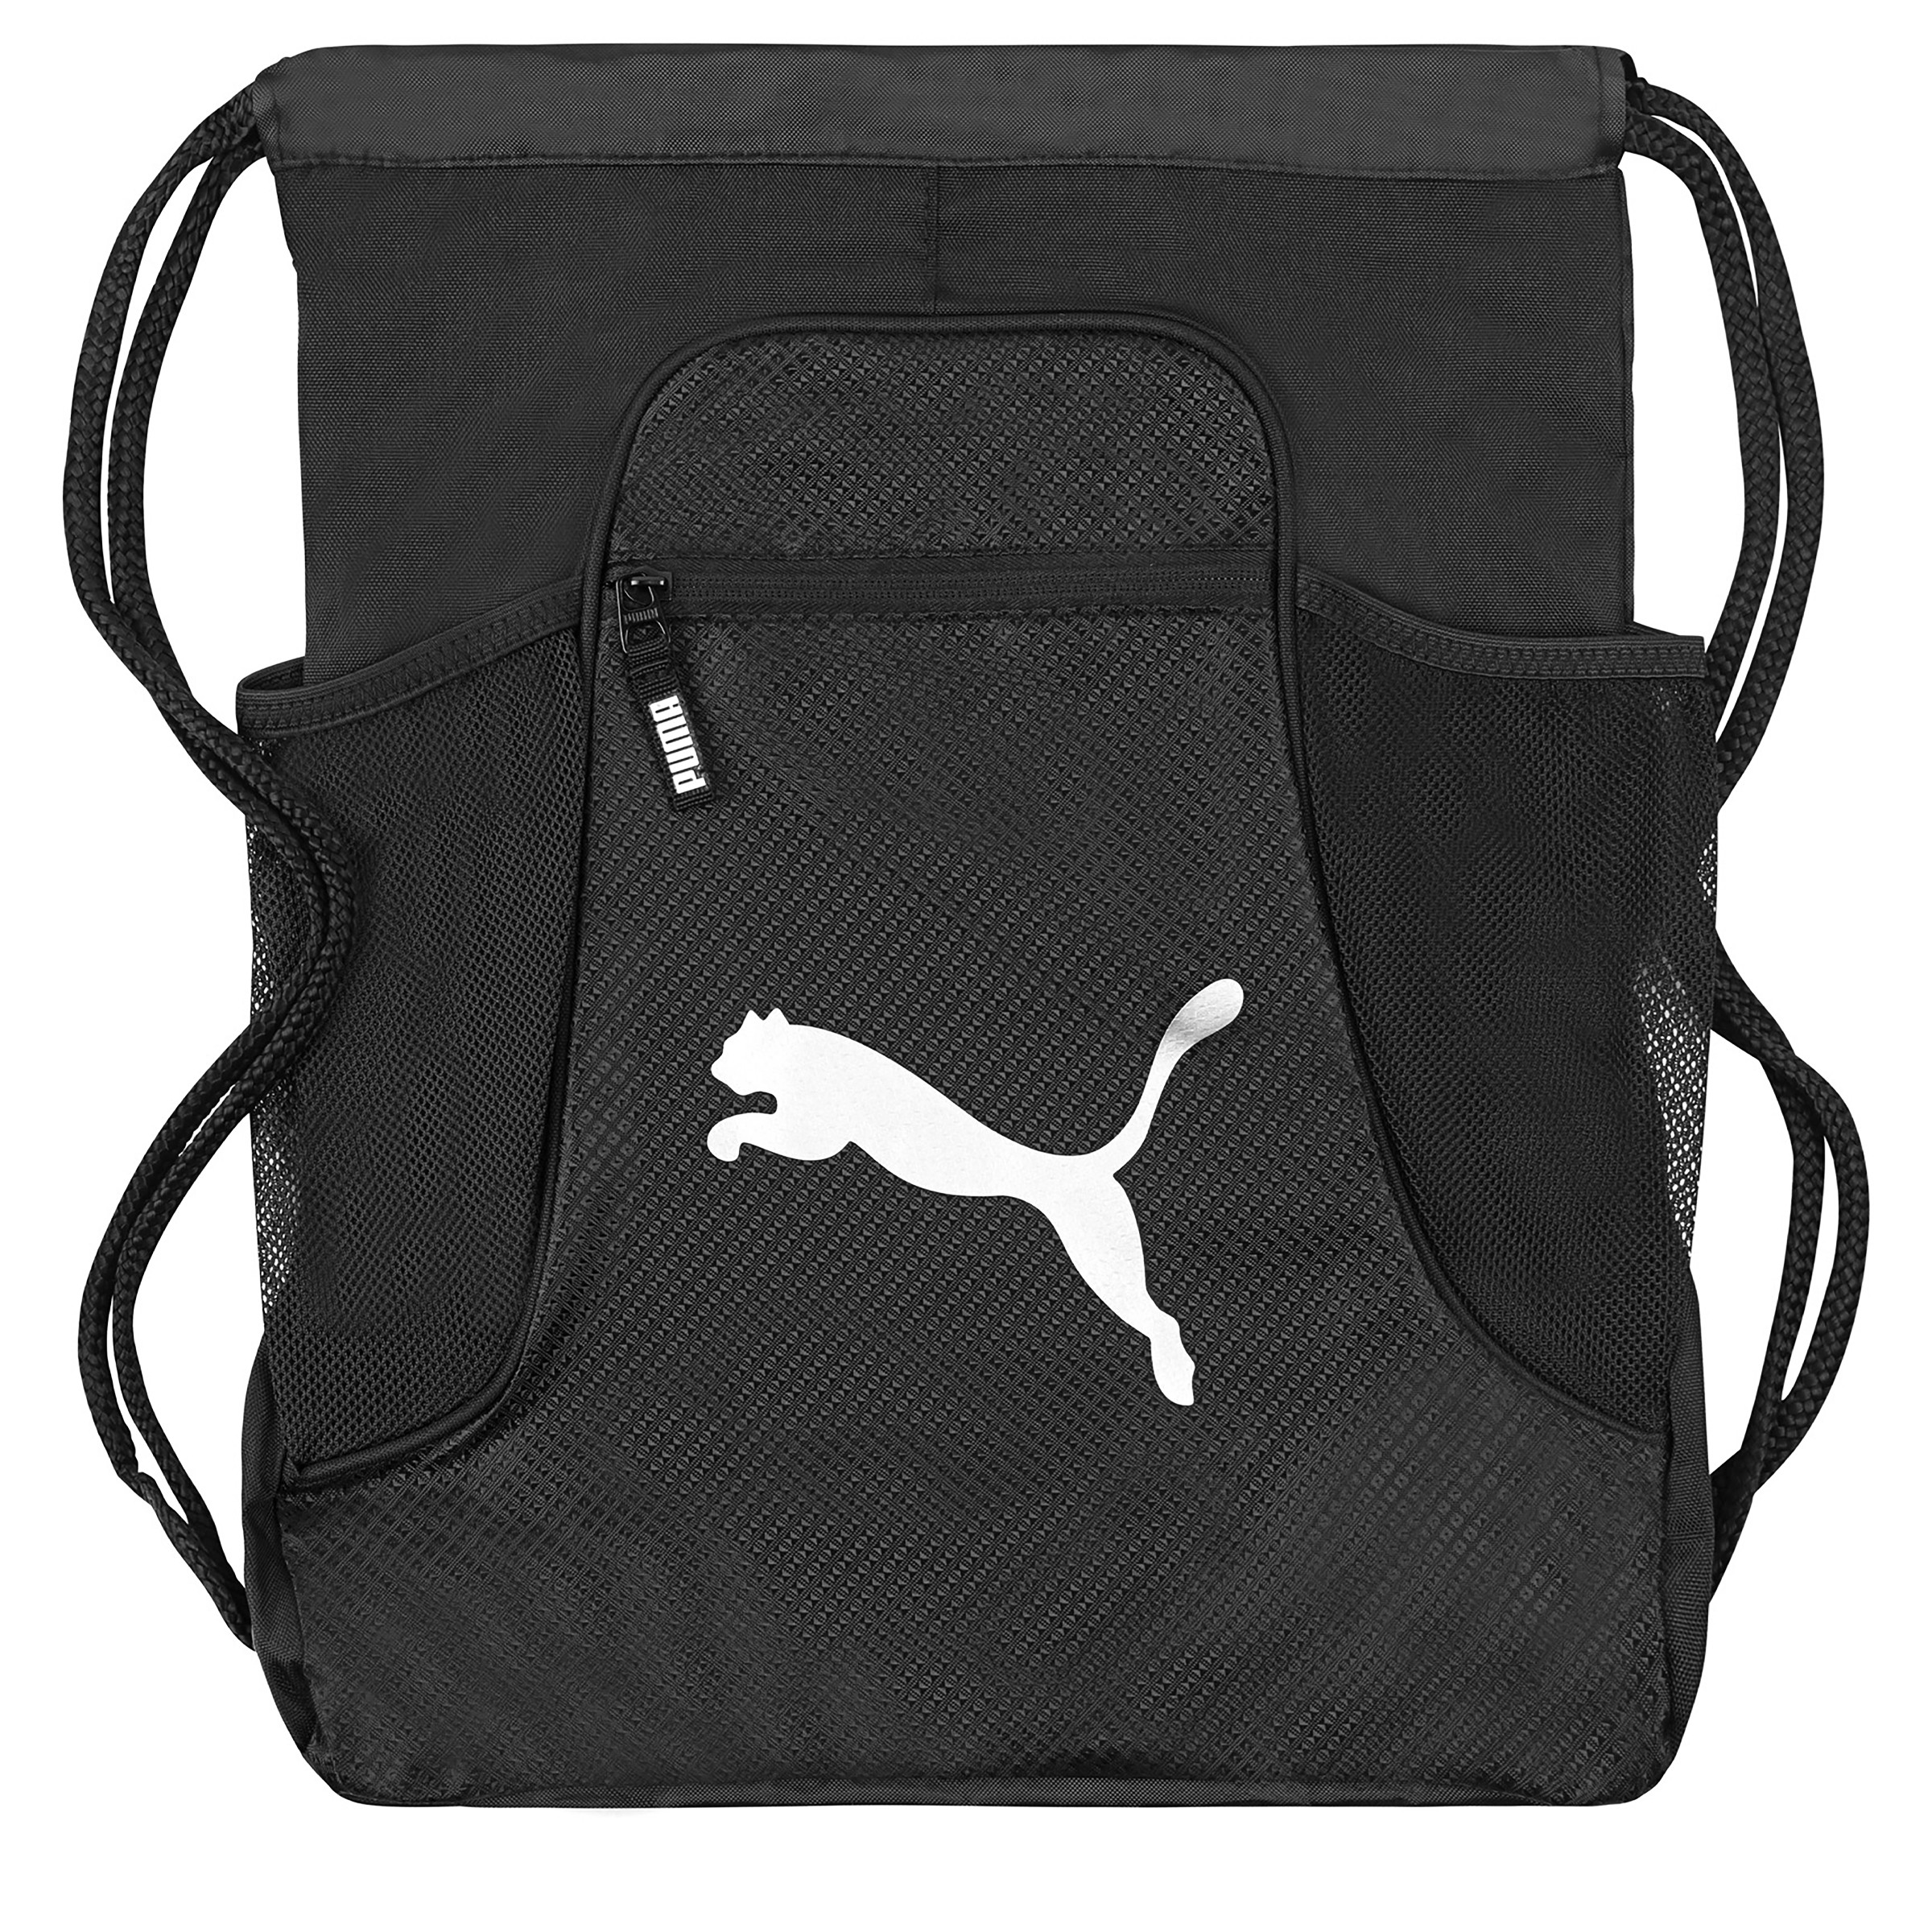 Equinox Carrysack Drawstring Backpack